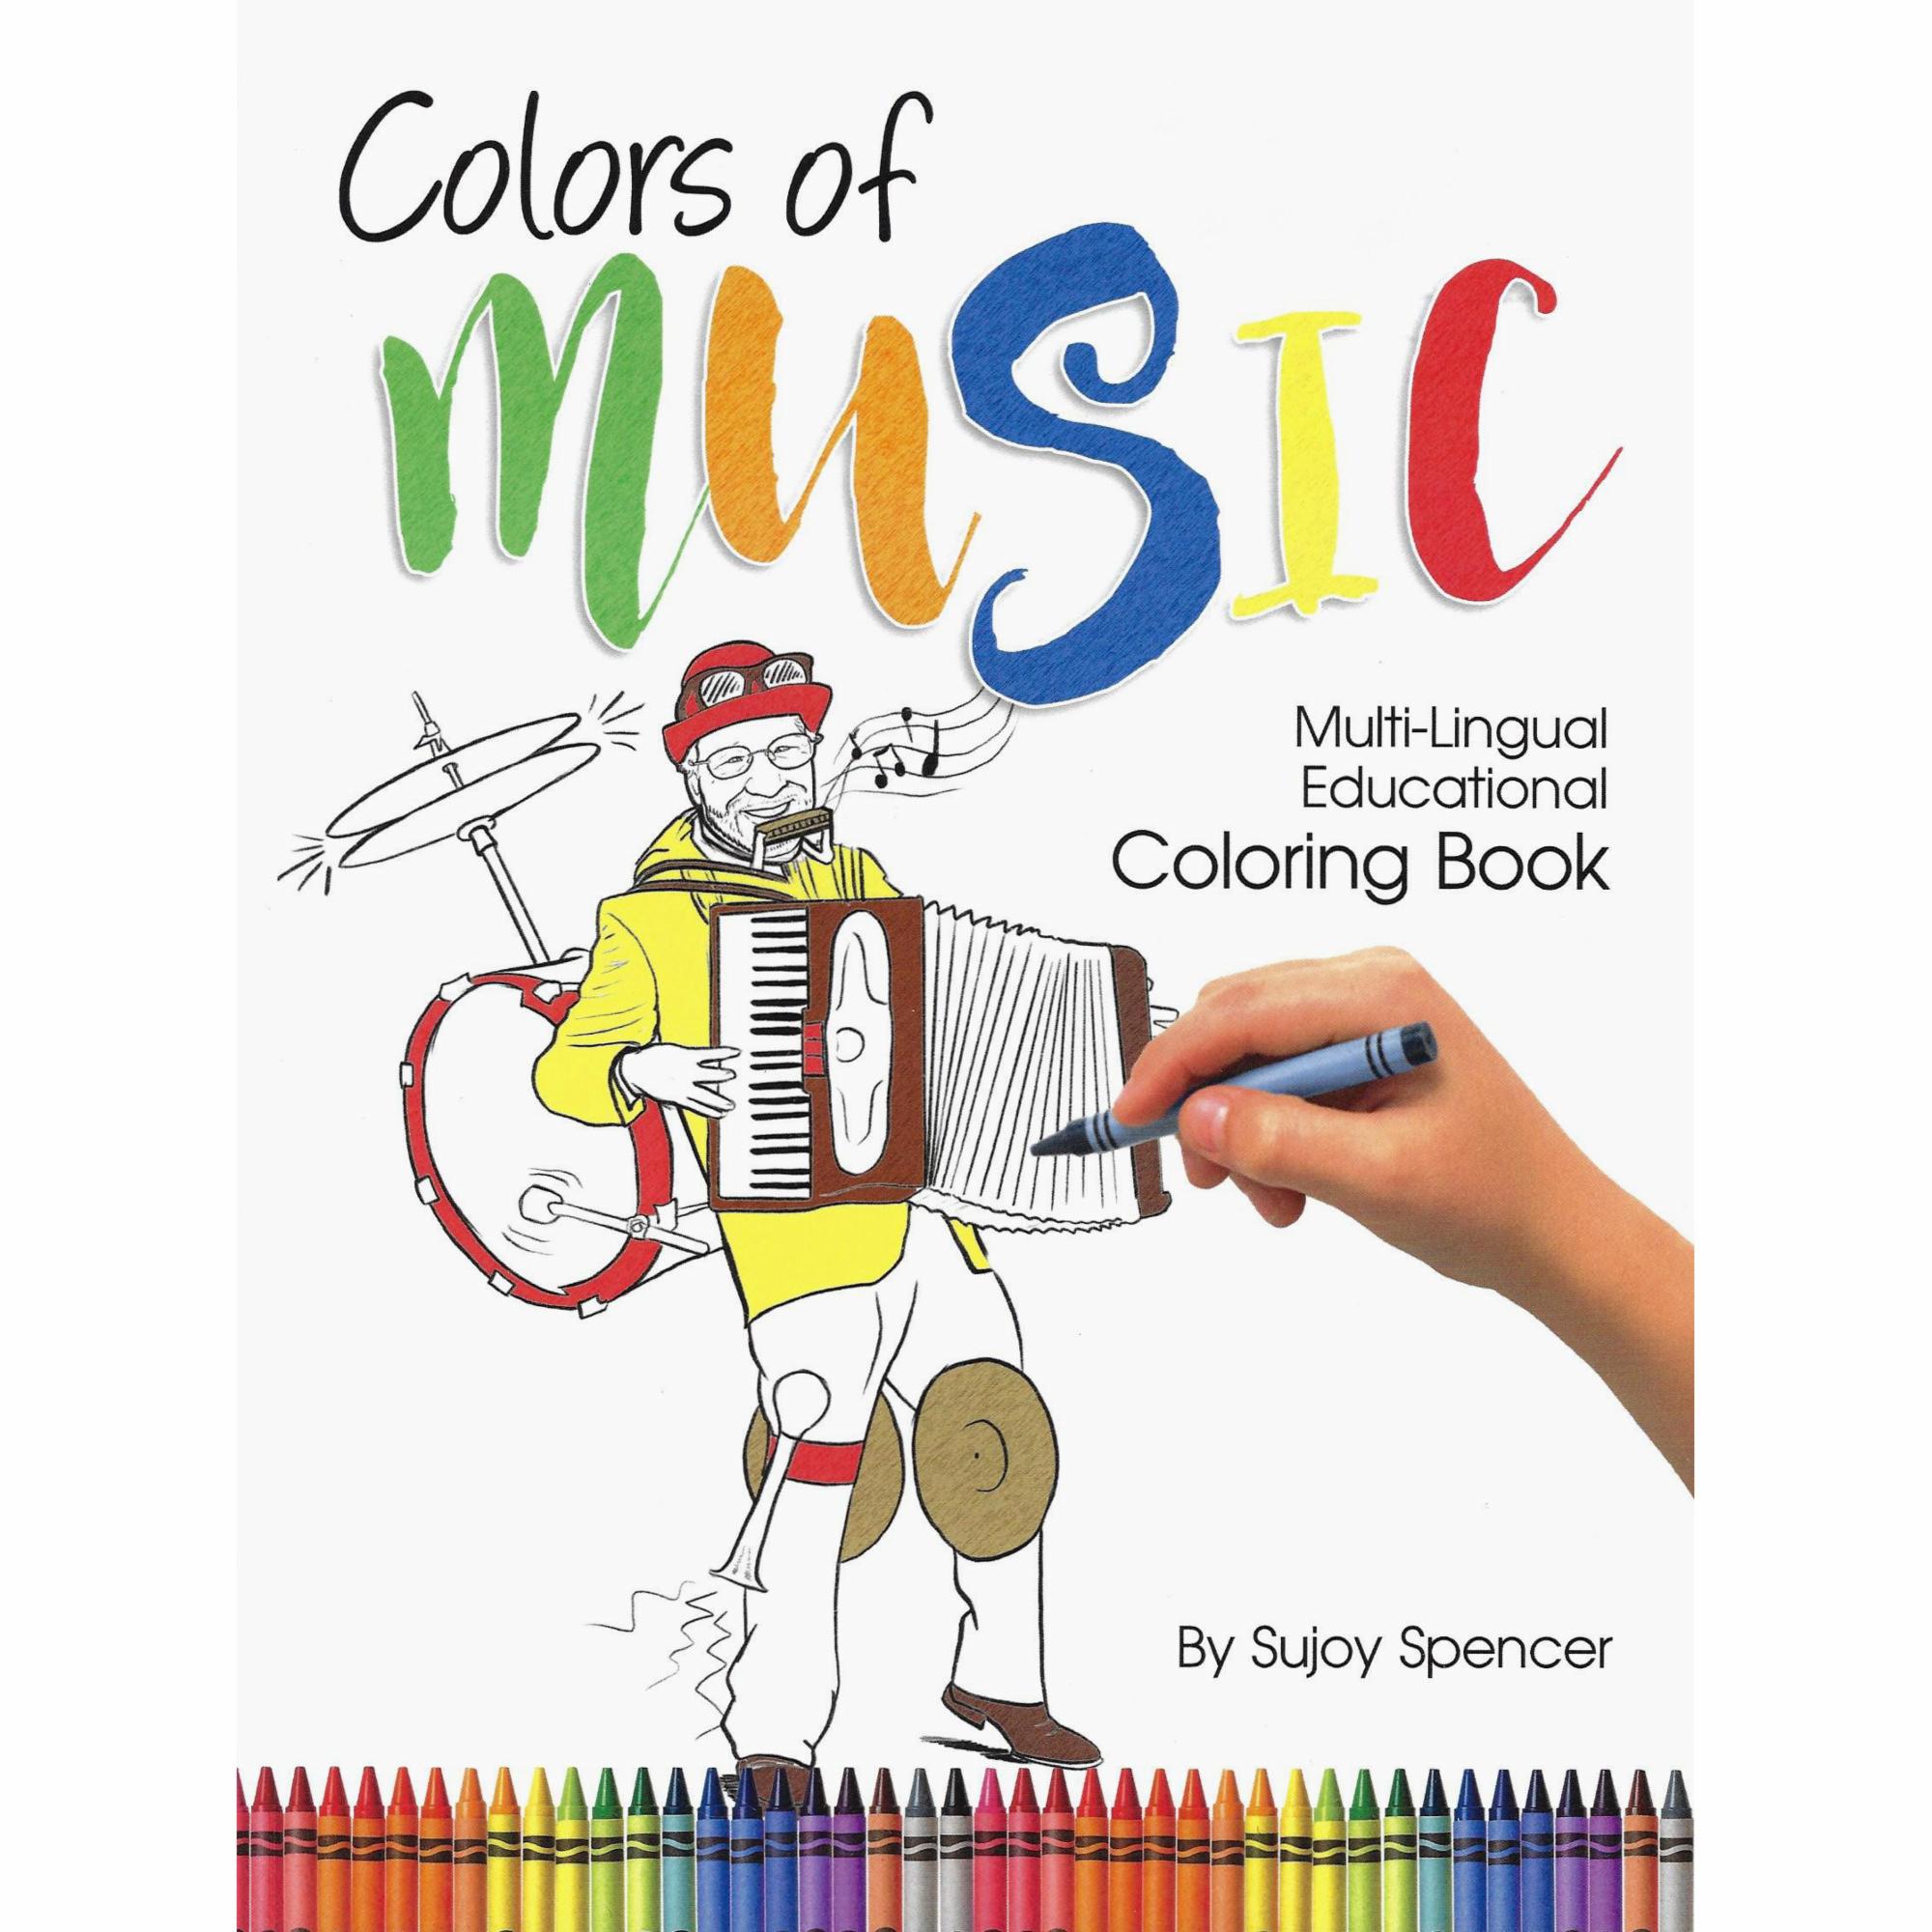 Colors of Music: Multi-Lingual Educational Coloring Book